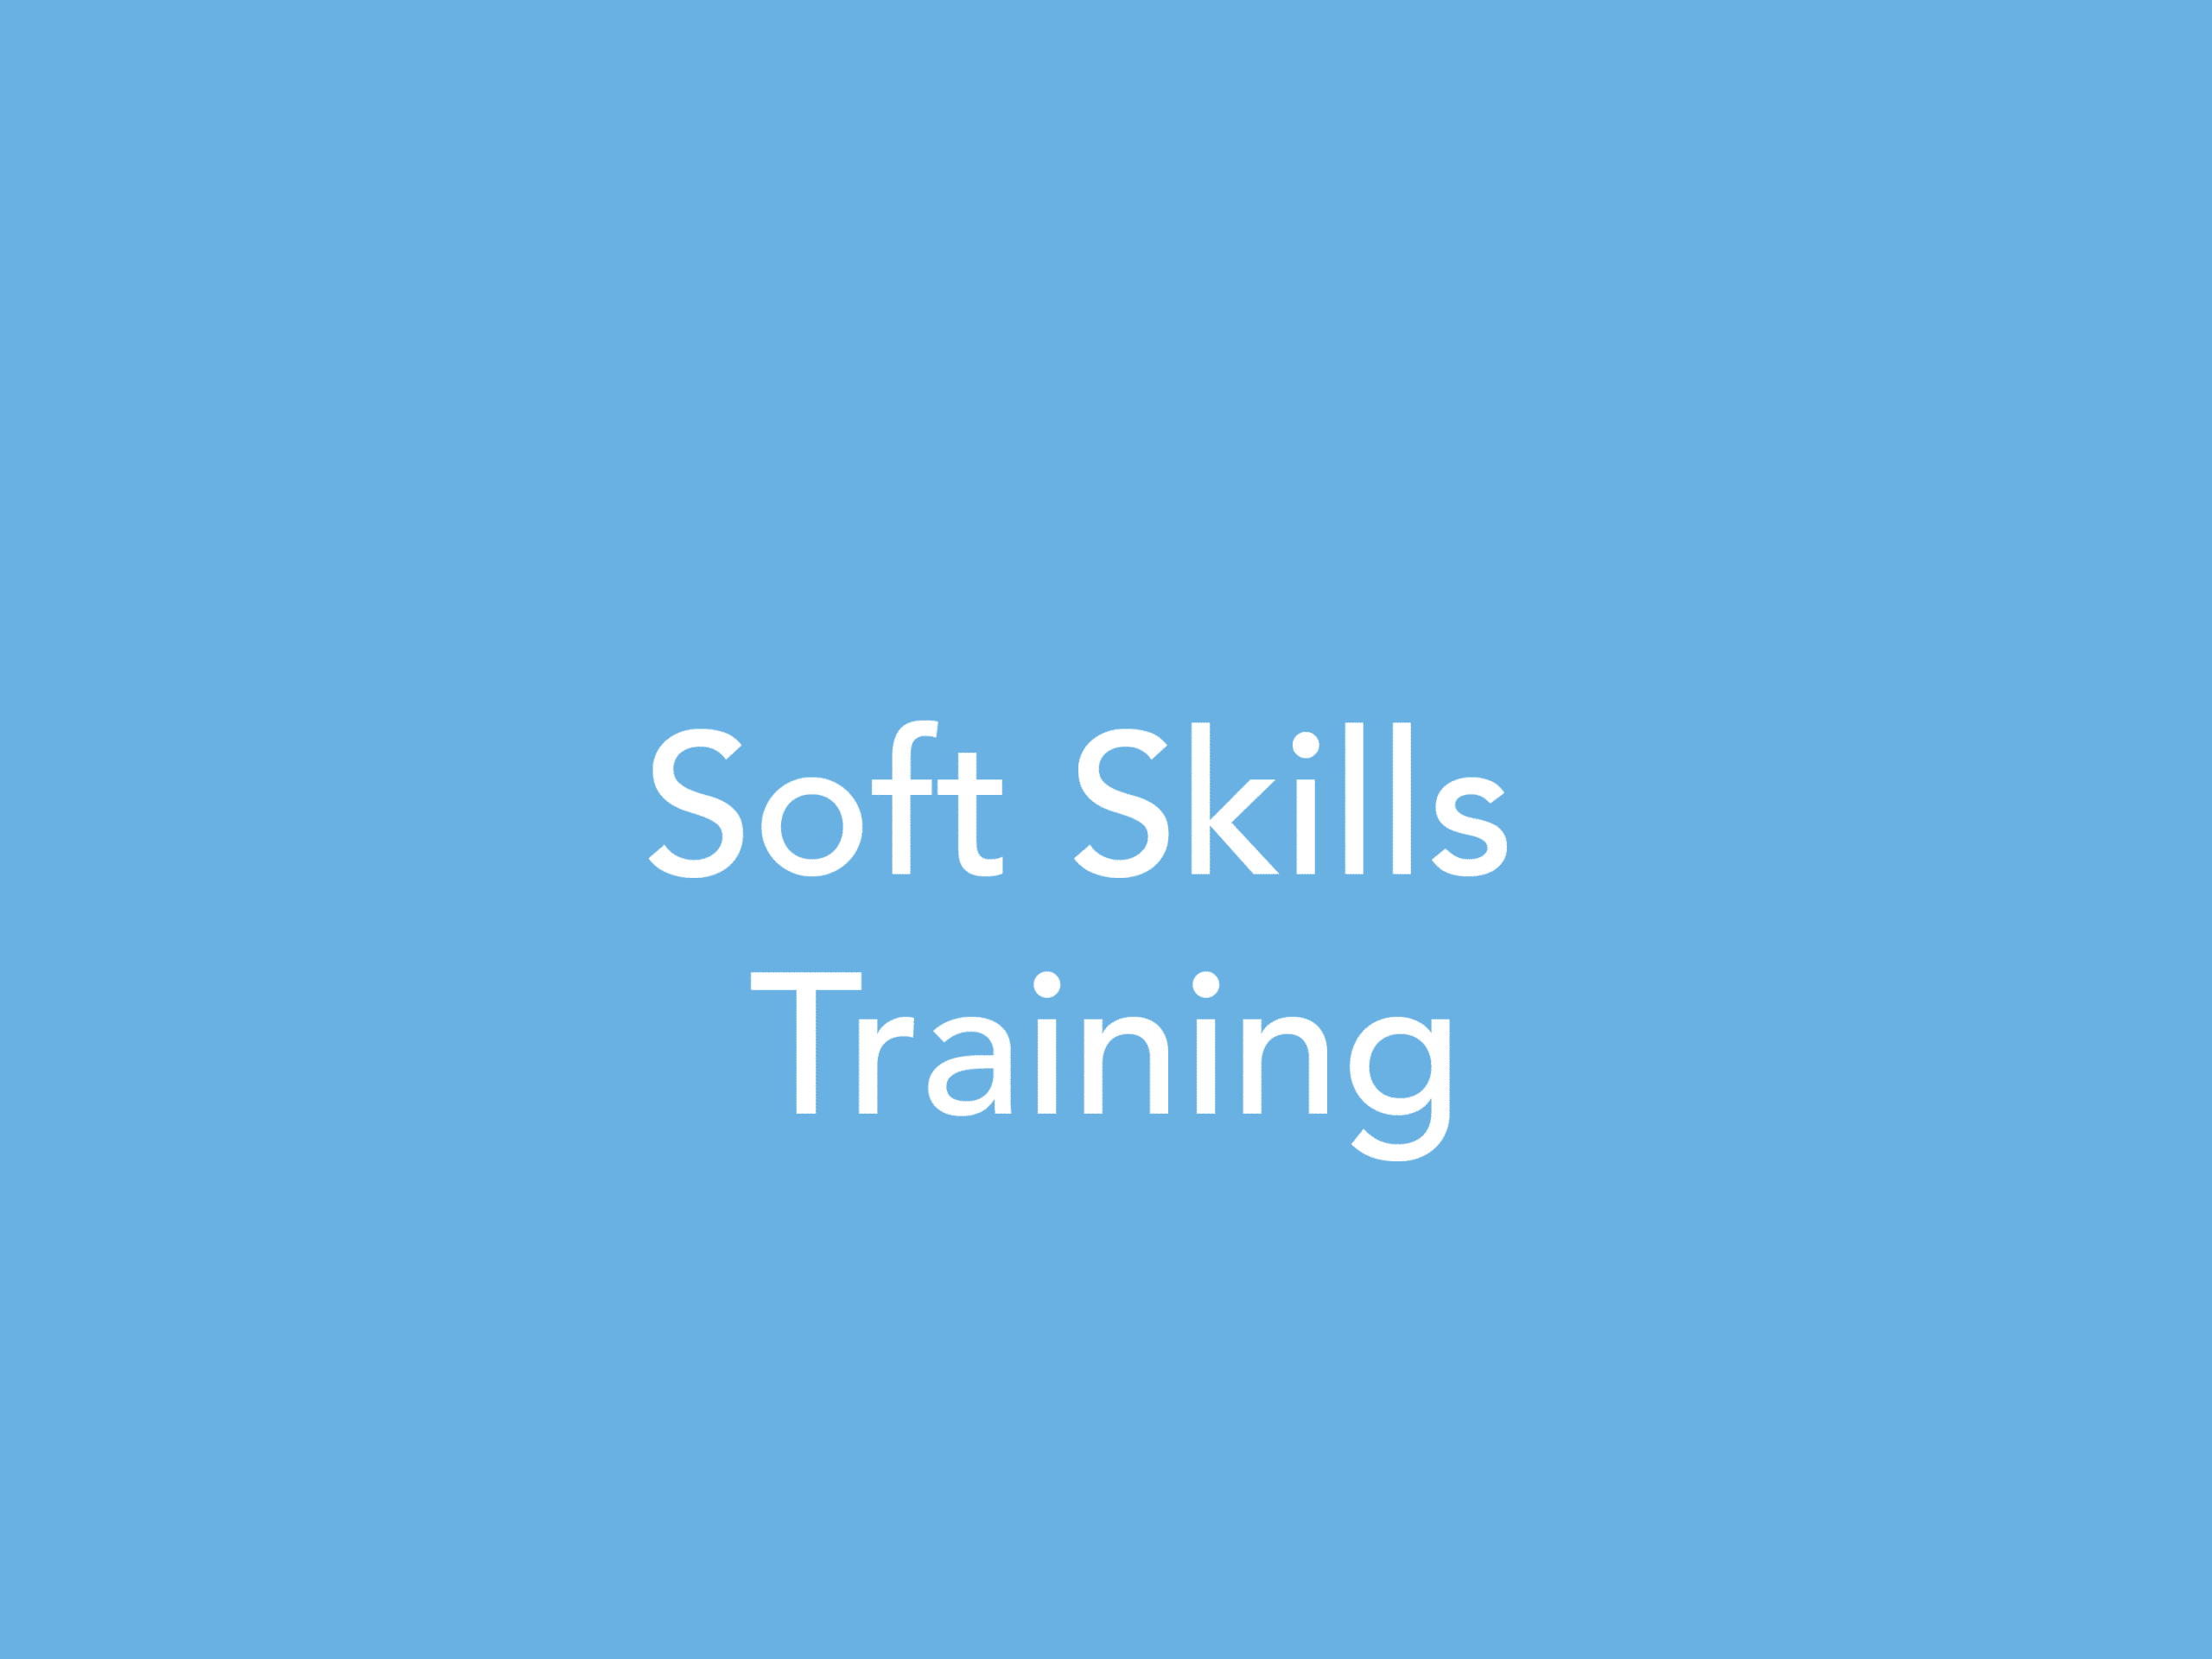 Soft Skills training